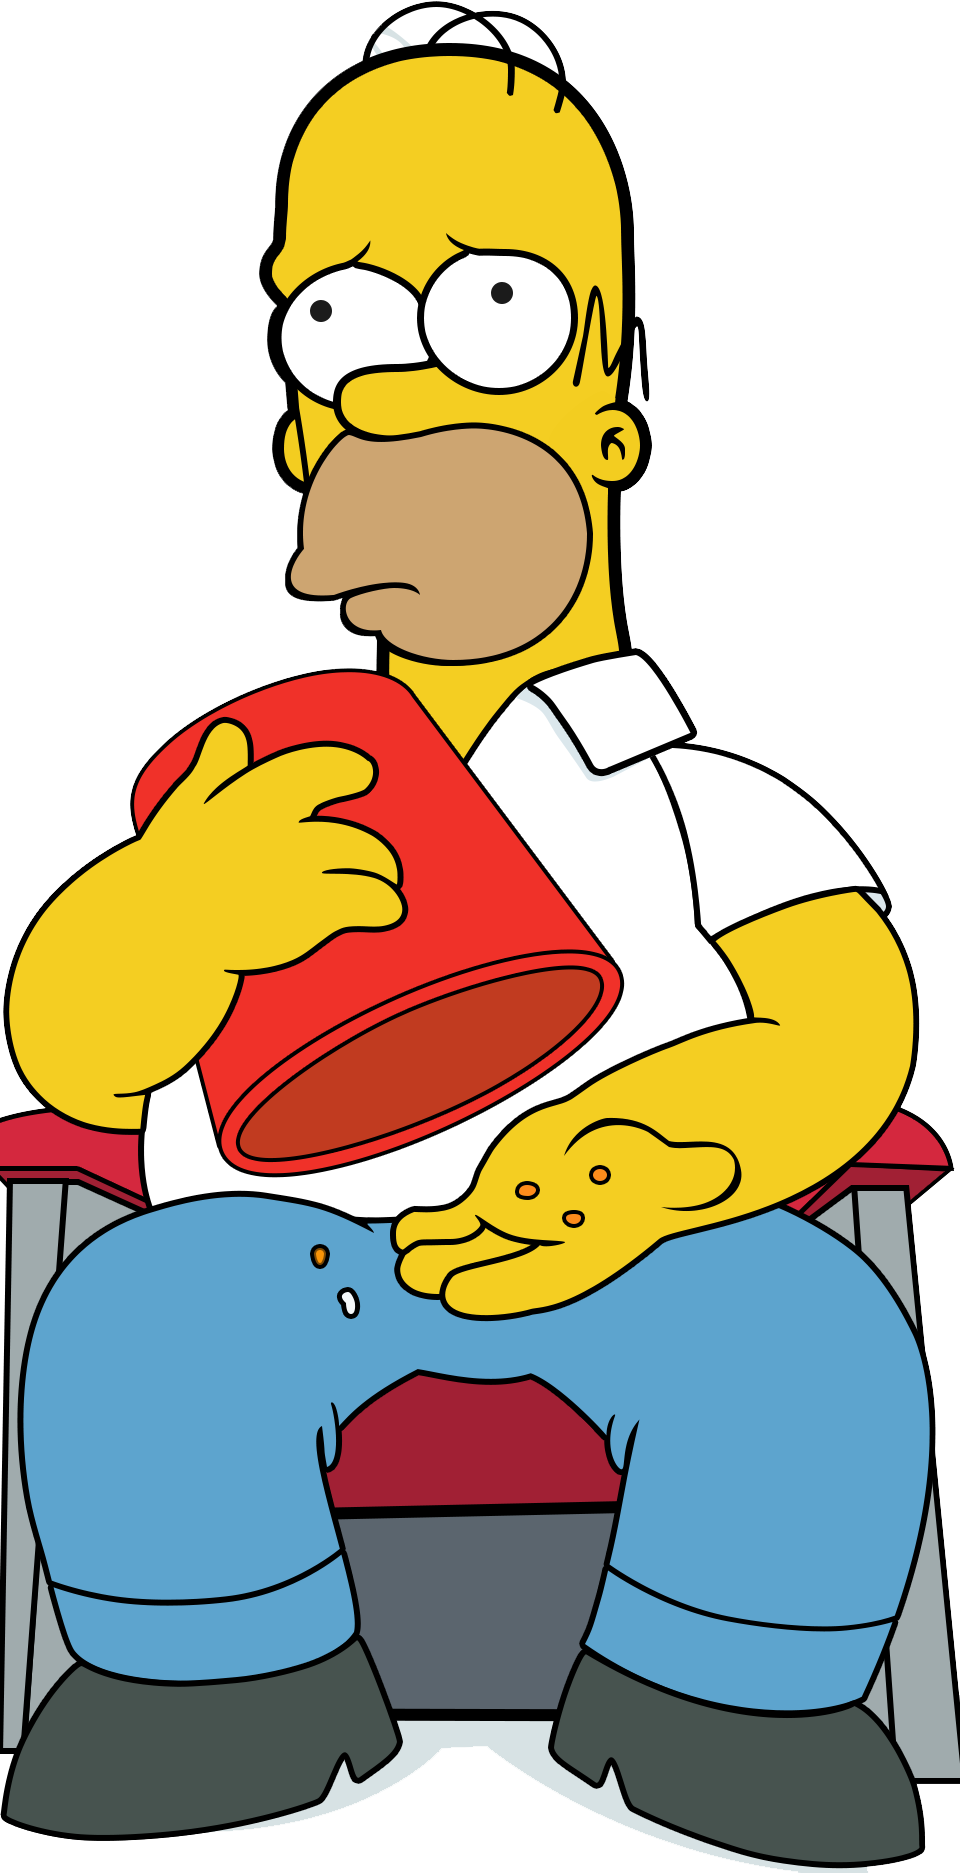 Simpsons Movie PNG Image